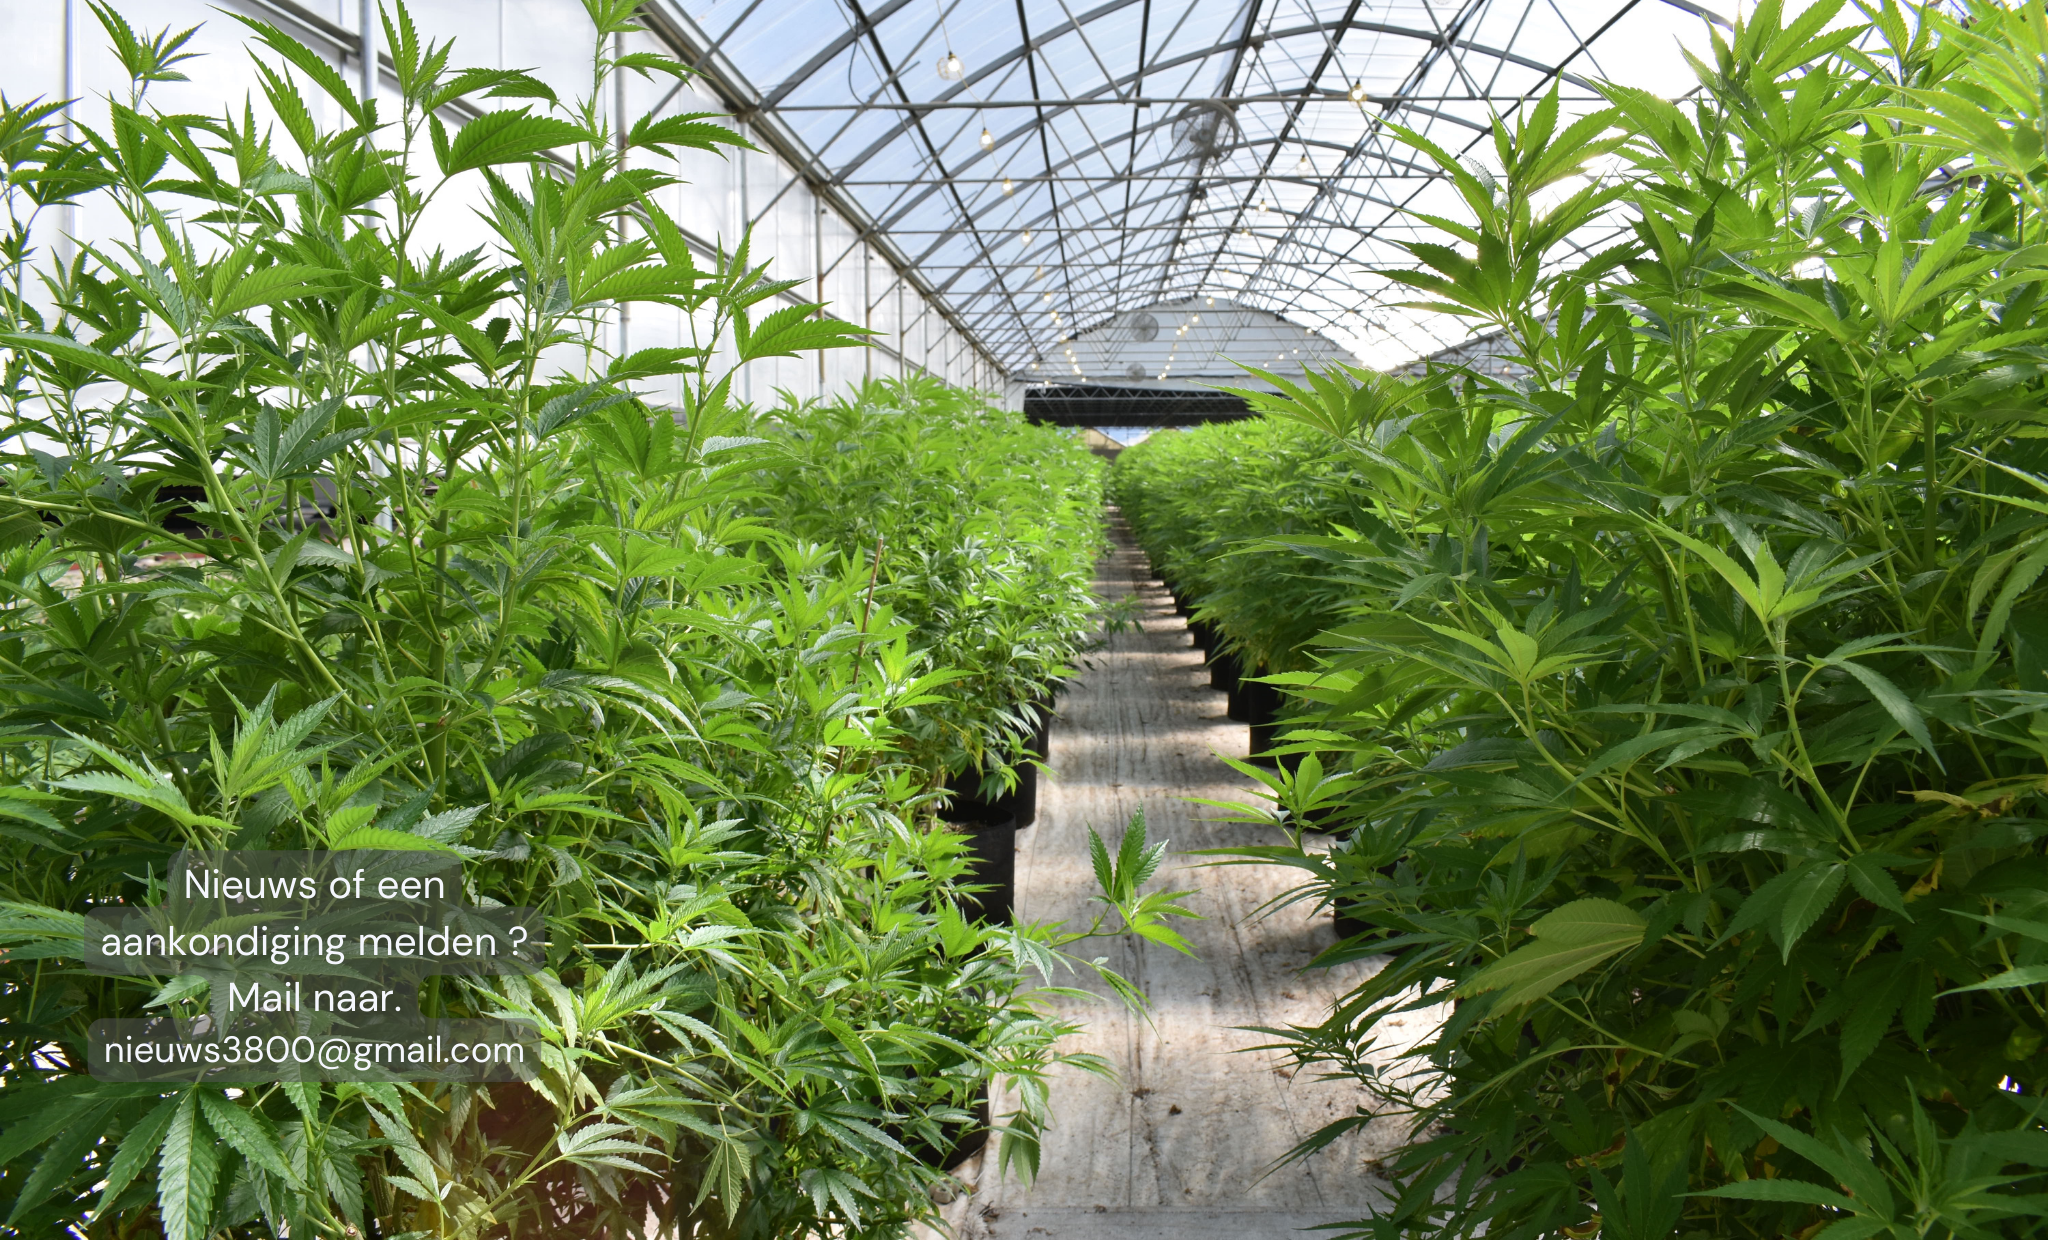 Cannabisplantage ontdekt in woning in Gingelom